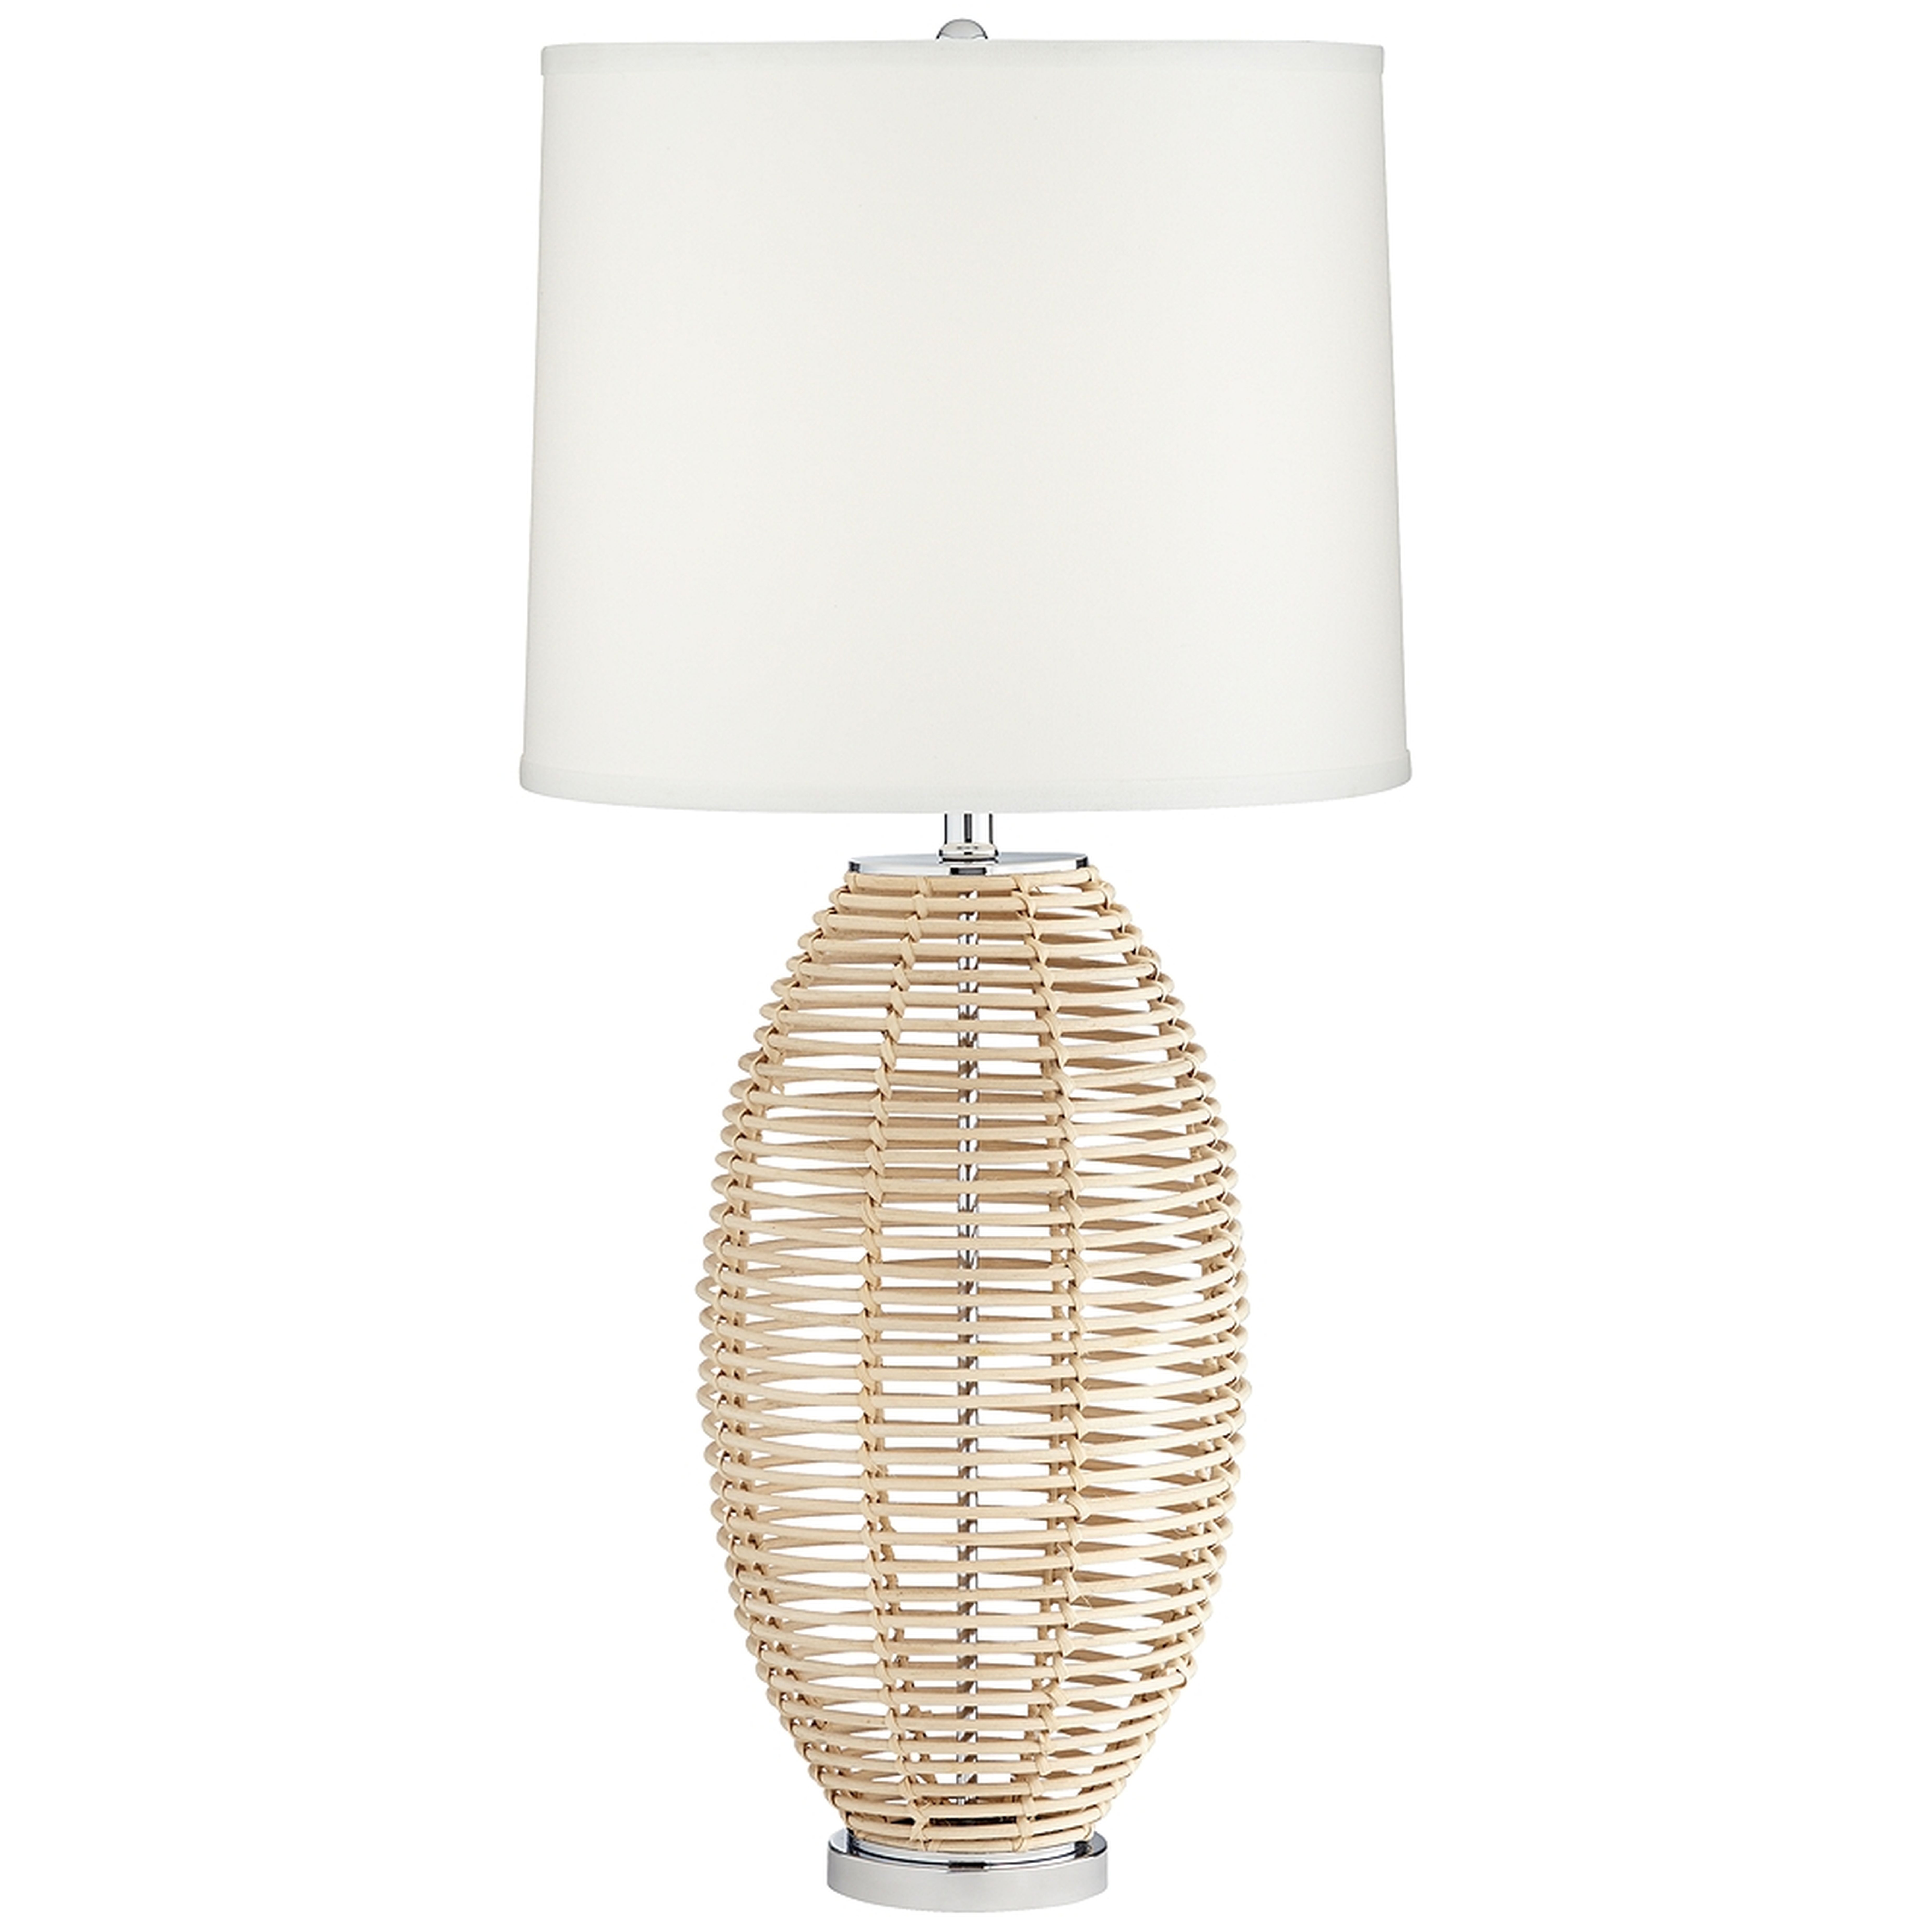 Knoll Natural Rattan Basket Table Lamp - Style # 77P00 - Lamps Plus